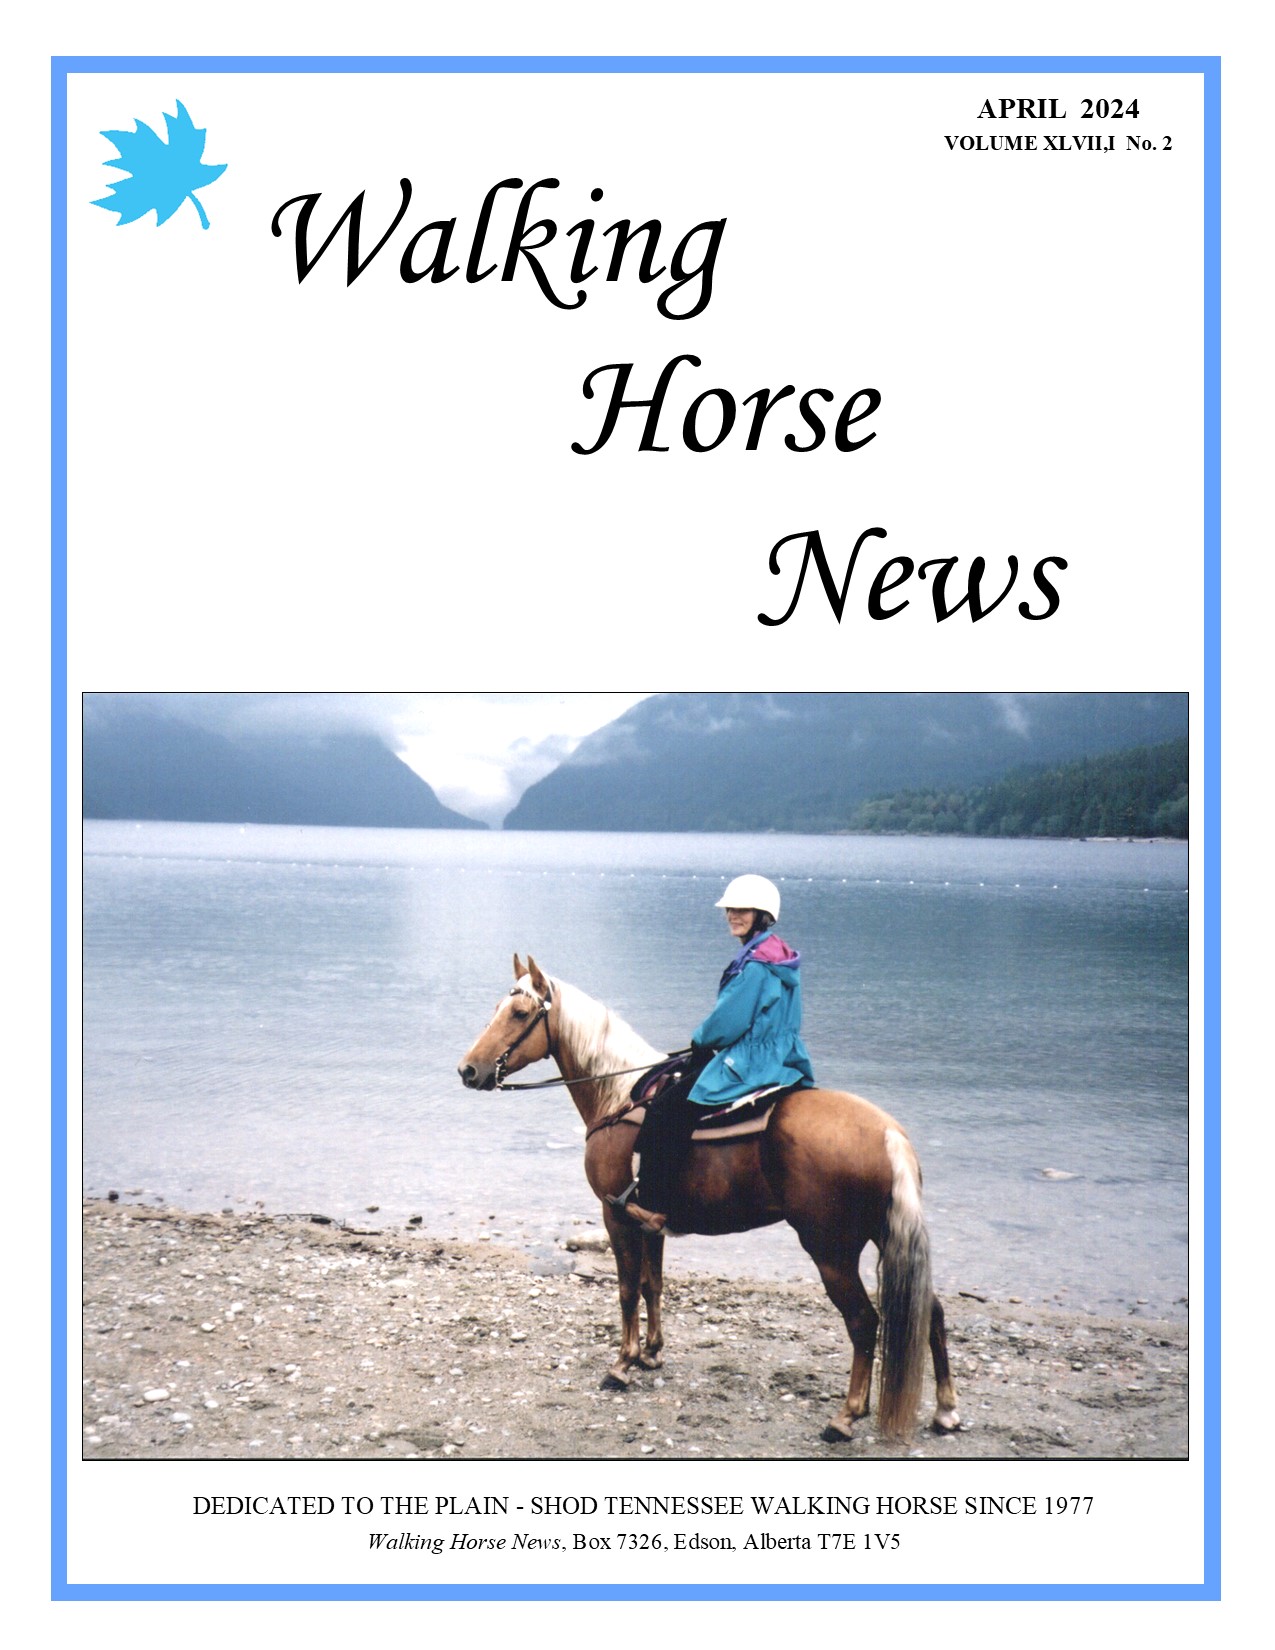 Tennessee Walking Horse Walking Horse News